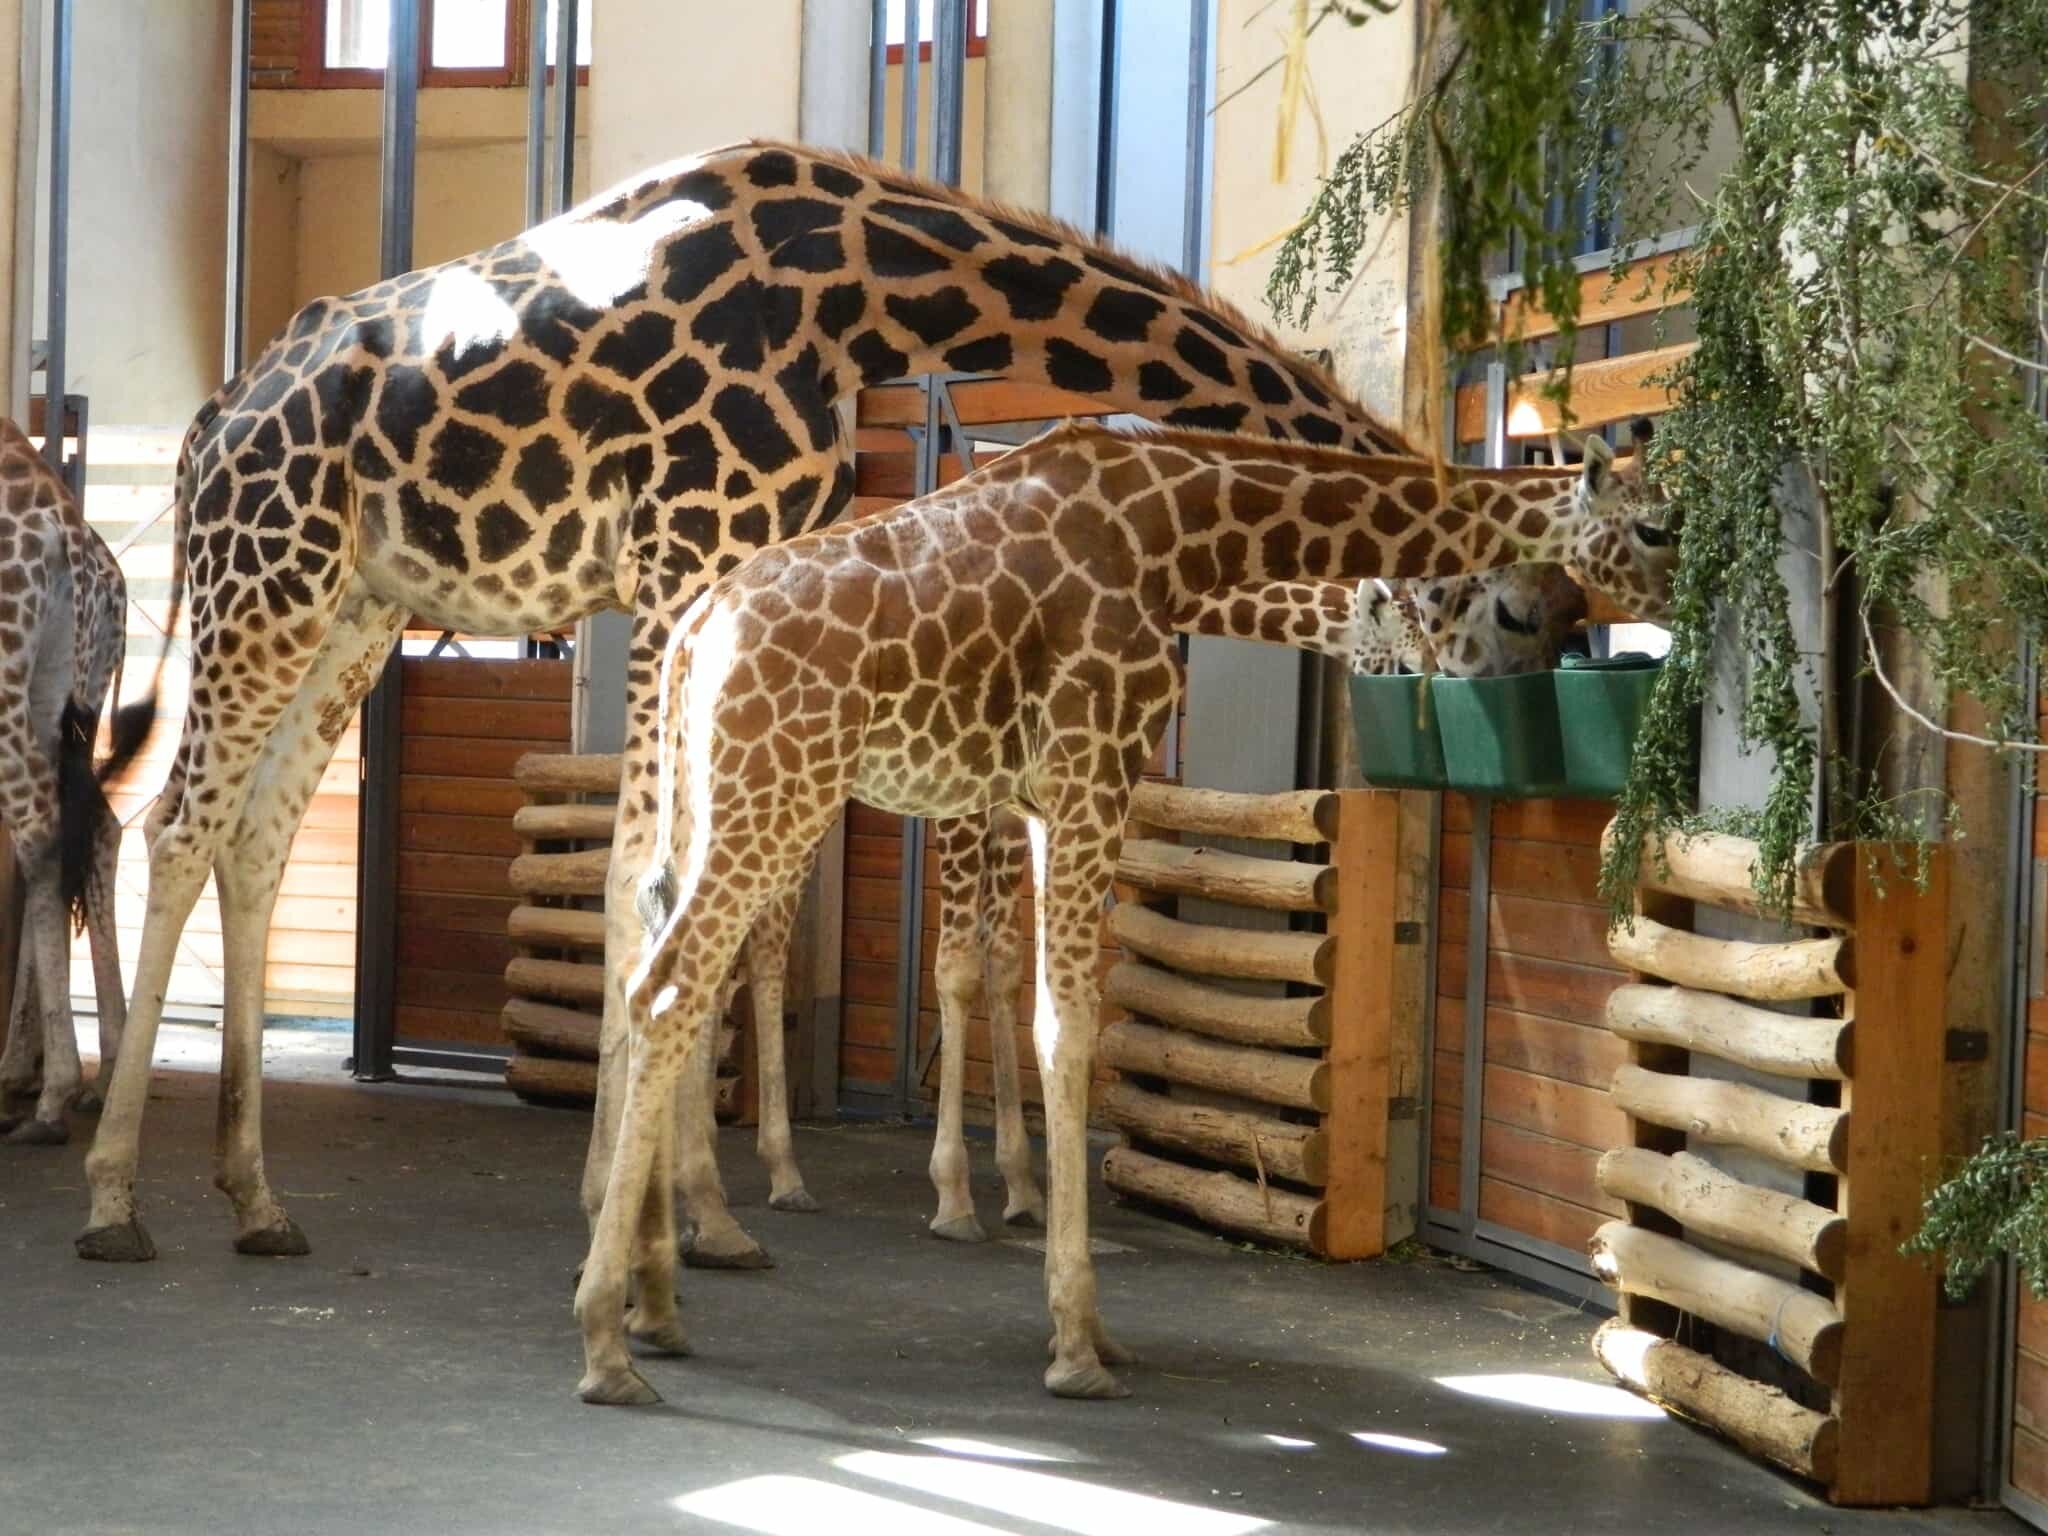 Giraffe feeding time at Budapest Zoo